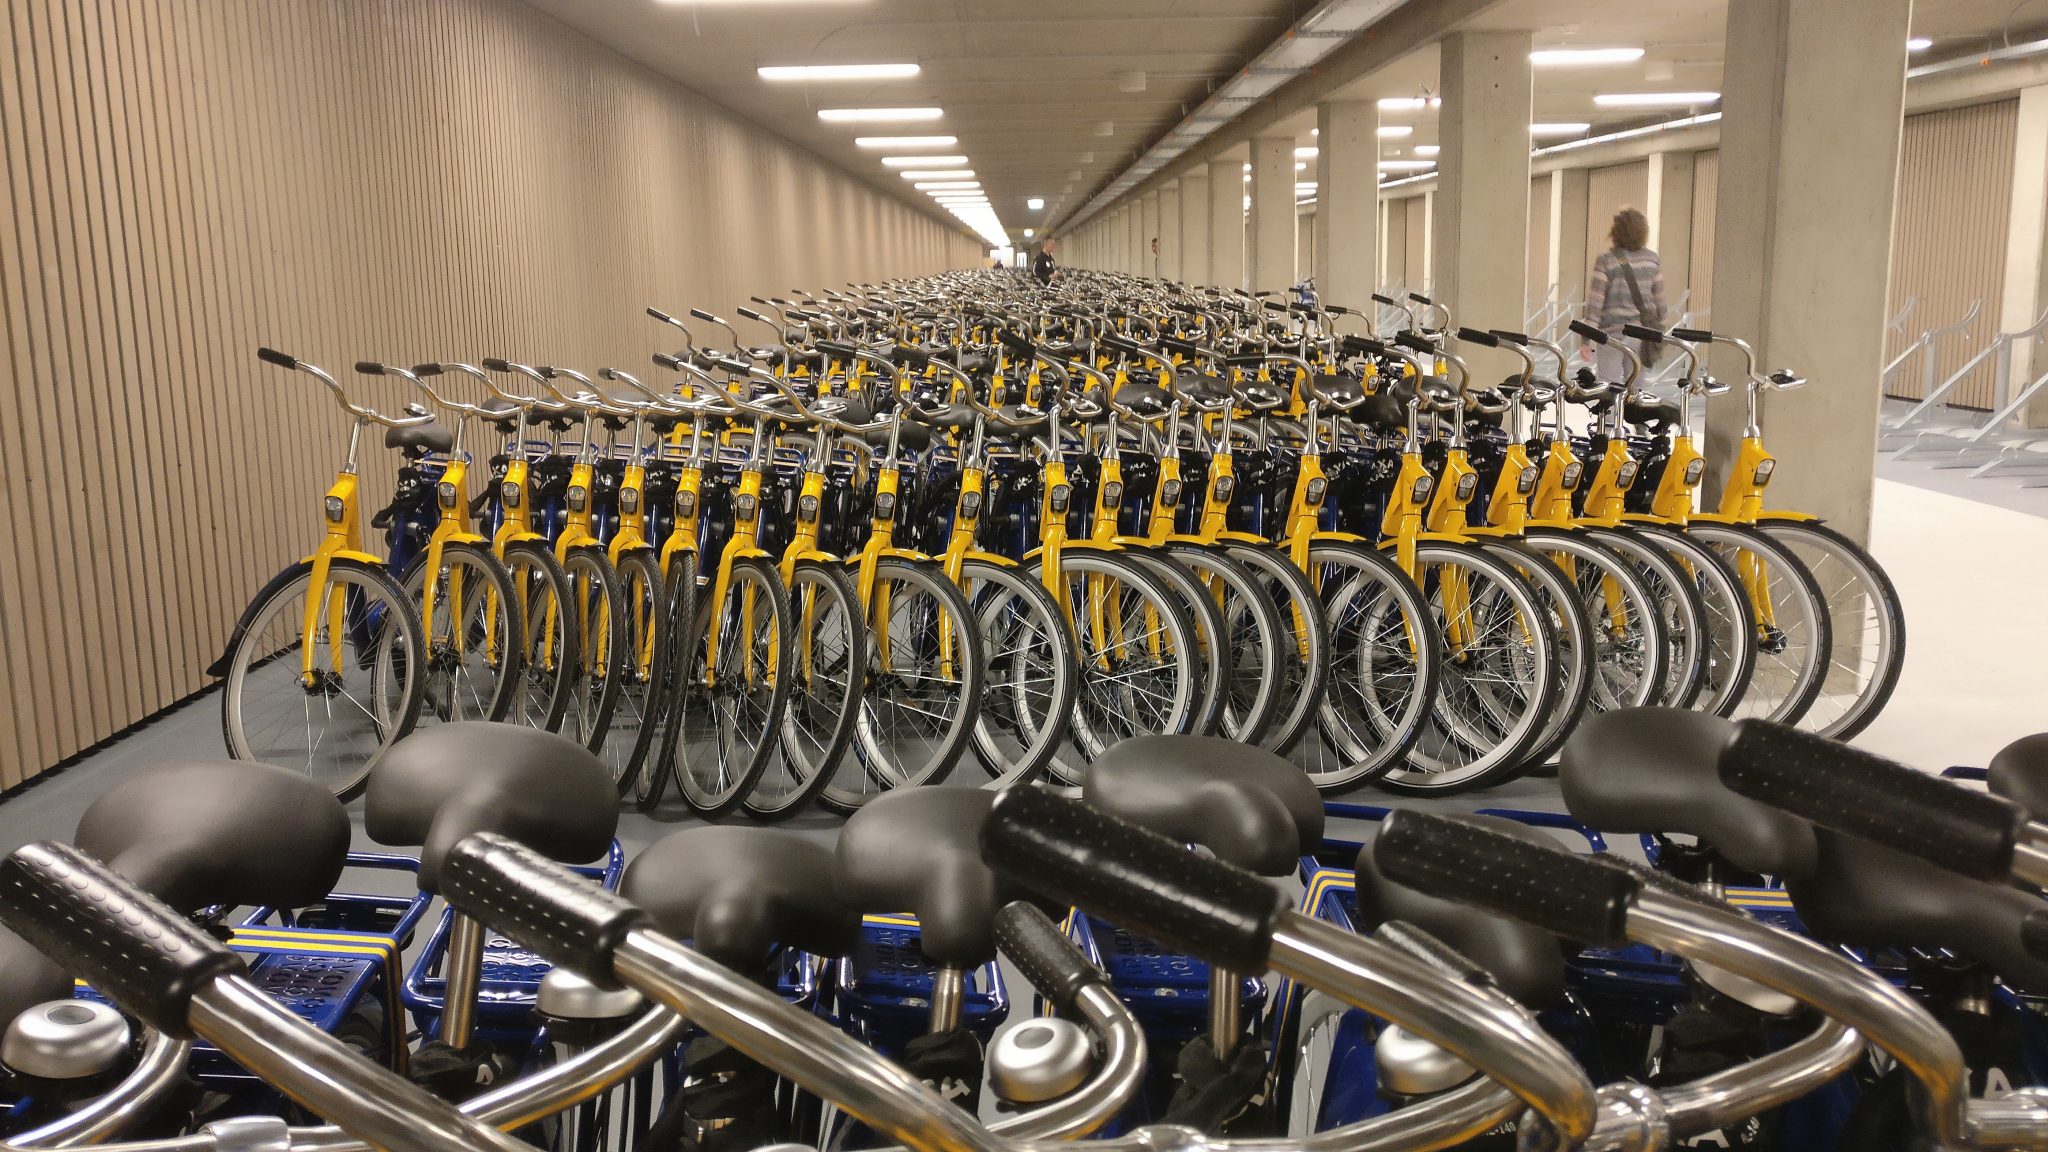 Druif Gom vrijwilliger OV-fiets 35 miljoen keer verhuurd | OV-Magazine